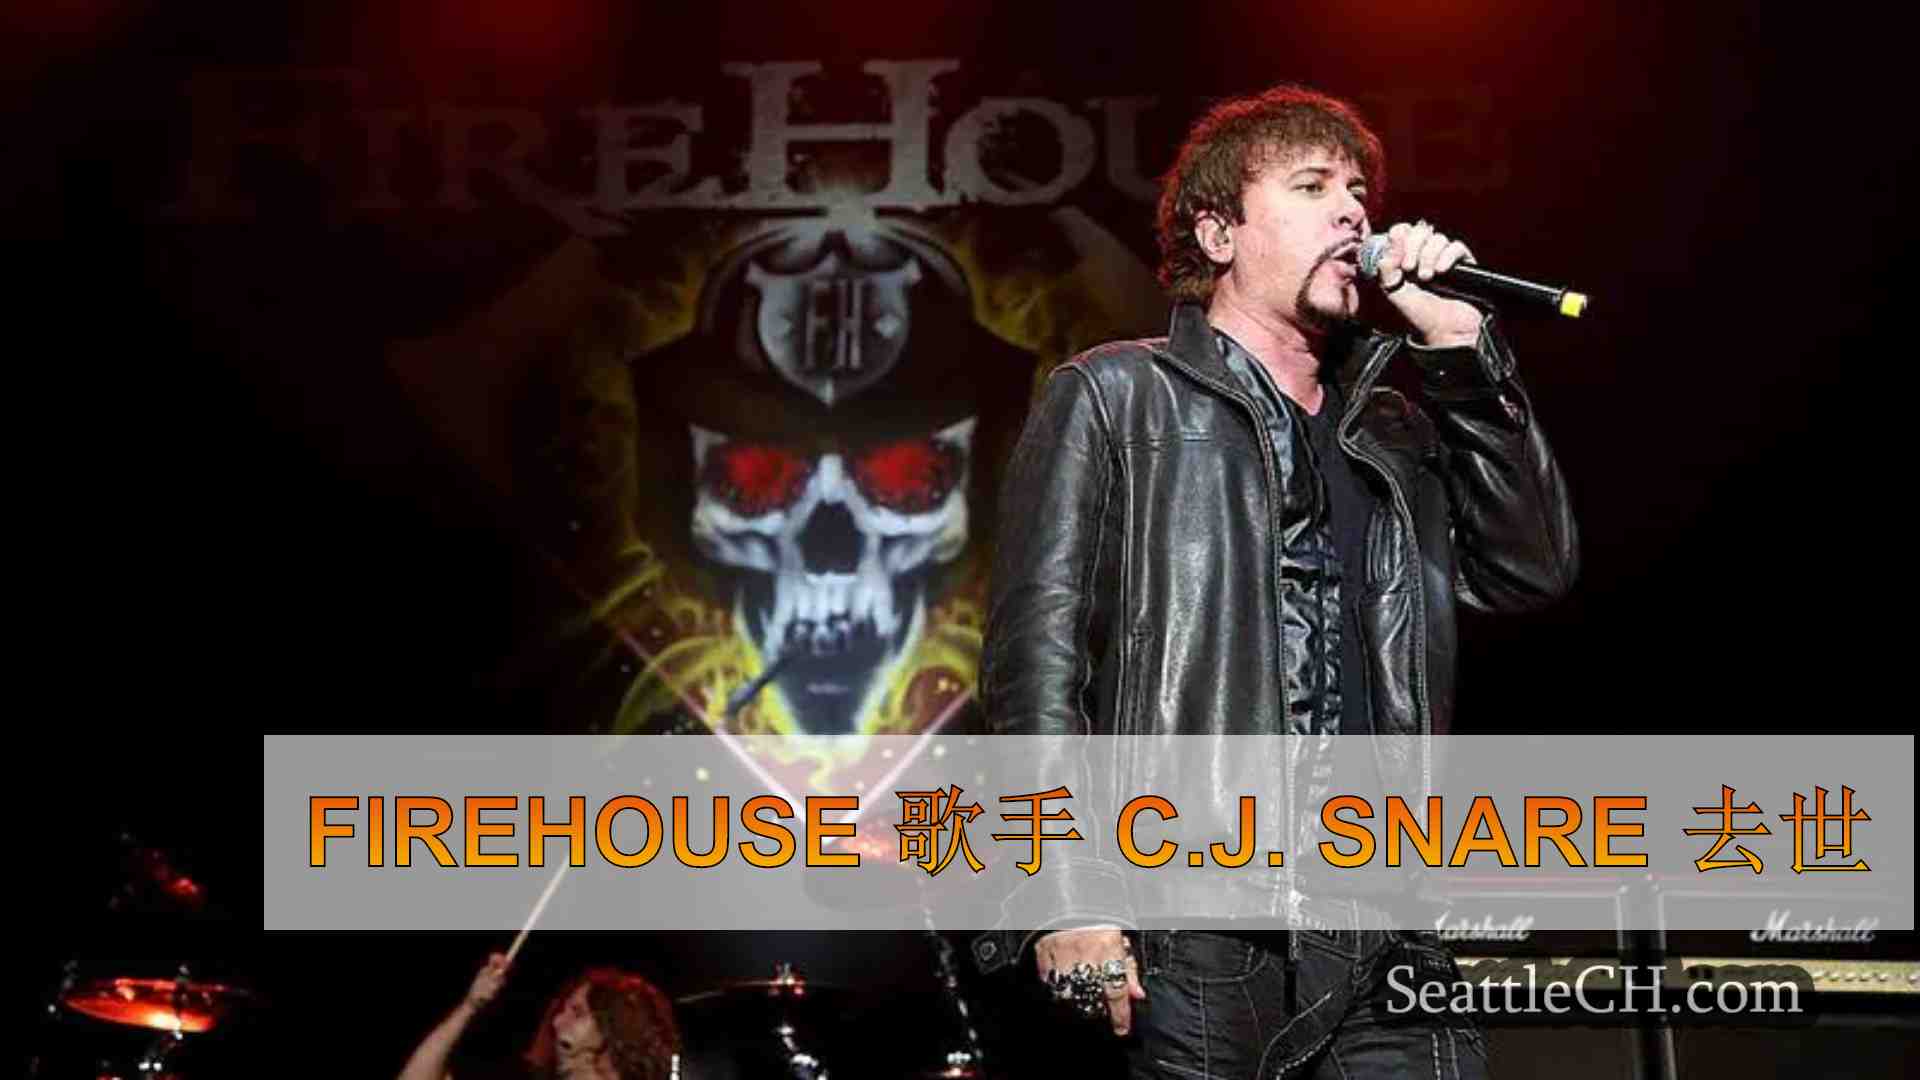 FireHouse 歌手 C.J. Snare 去世